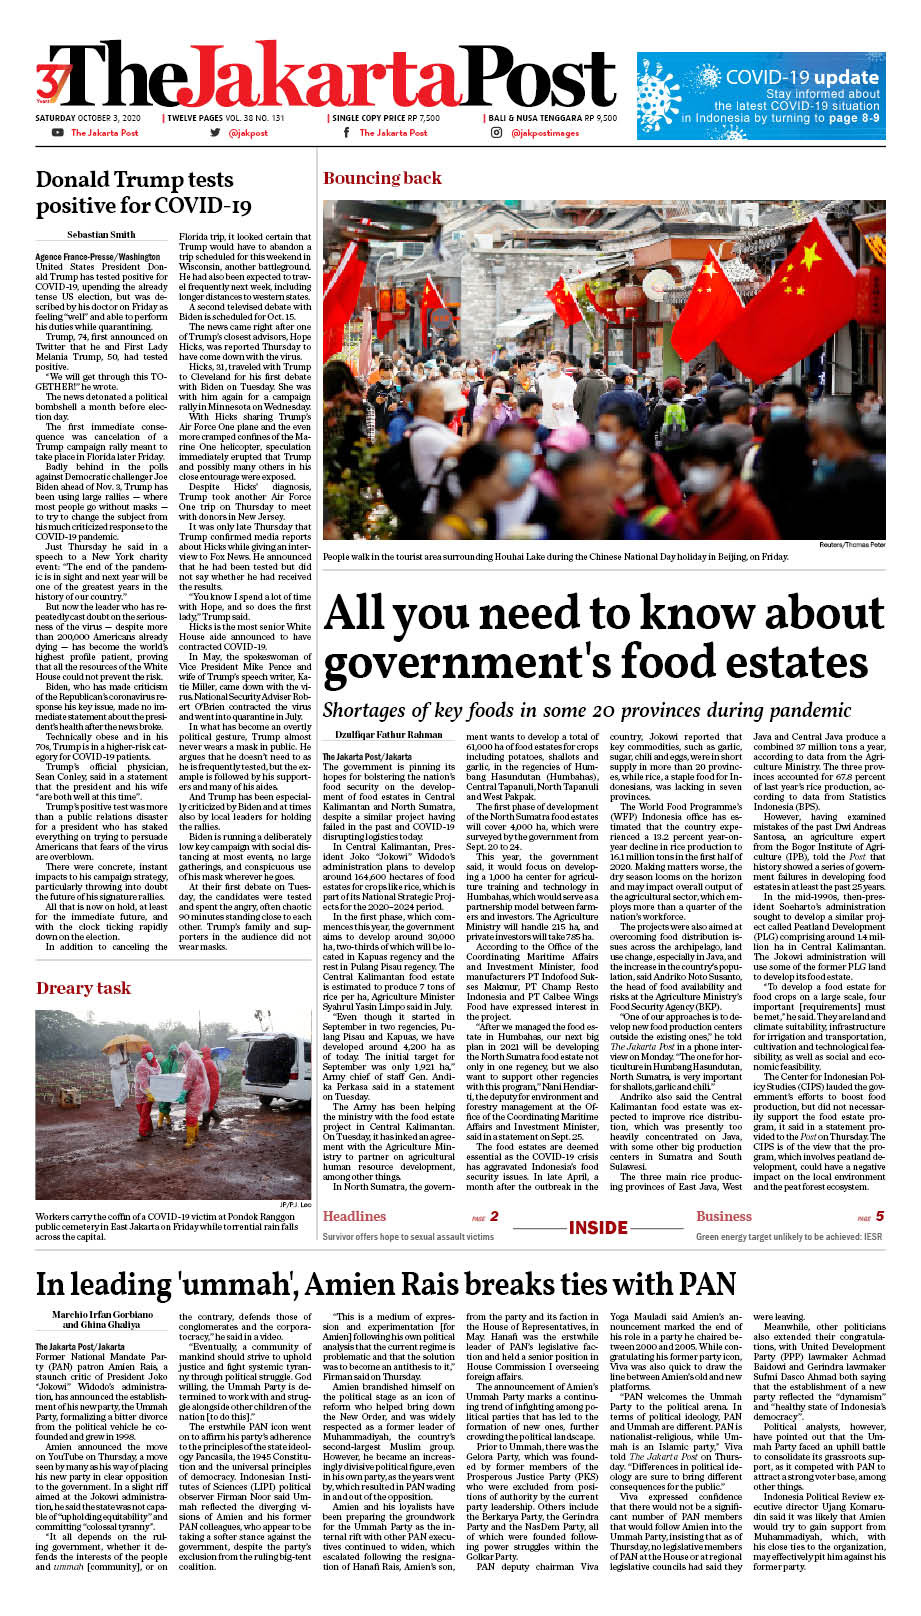 Frontpage - Sat, October 3, 2020 - The Jakarta Post